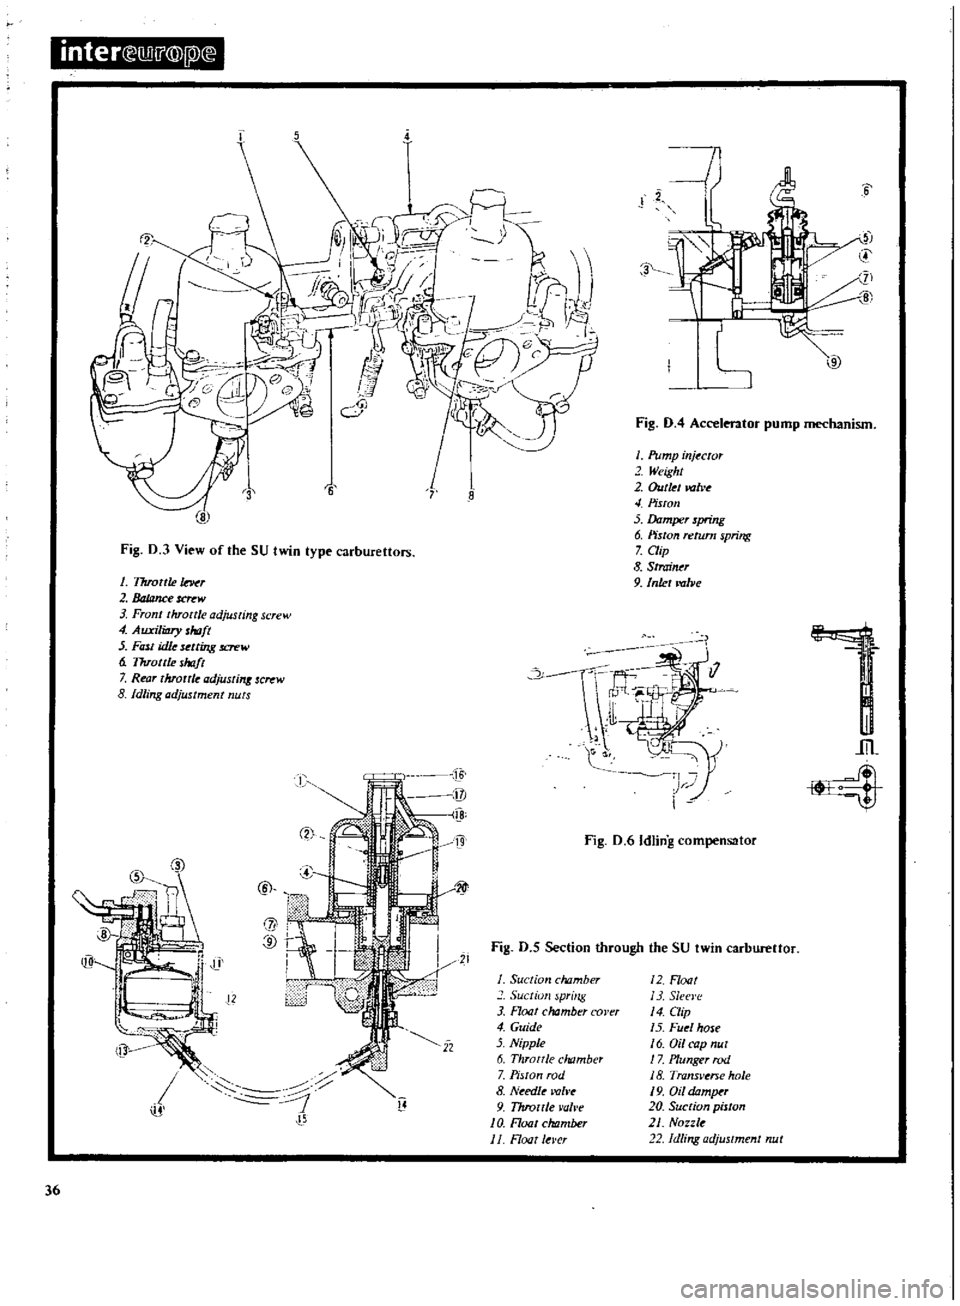 DATSUN 510 1969  Service Repair Manual 
inter 
ill 
j

@
pl

T 
i

5

12

Fig 
D 
3

View 
of 
the 
SU 
twin

type 
carburettors

1

Throttle 
r

2 
JaJana

crew

Front 
throttle

adjusting 
screw

4

AuxiliDry 
shoft

5 
Ftnt 
idle

selli